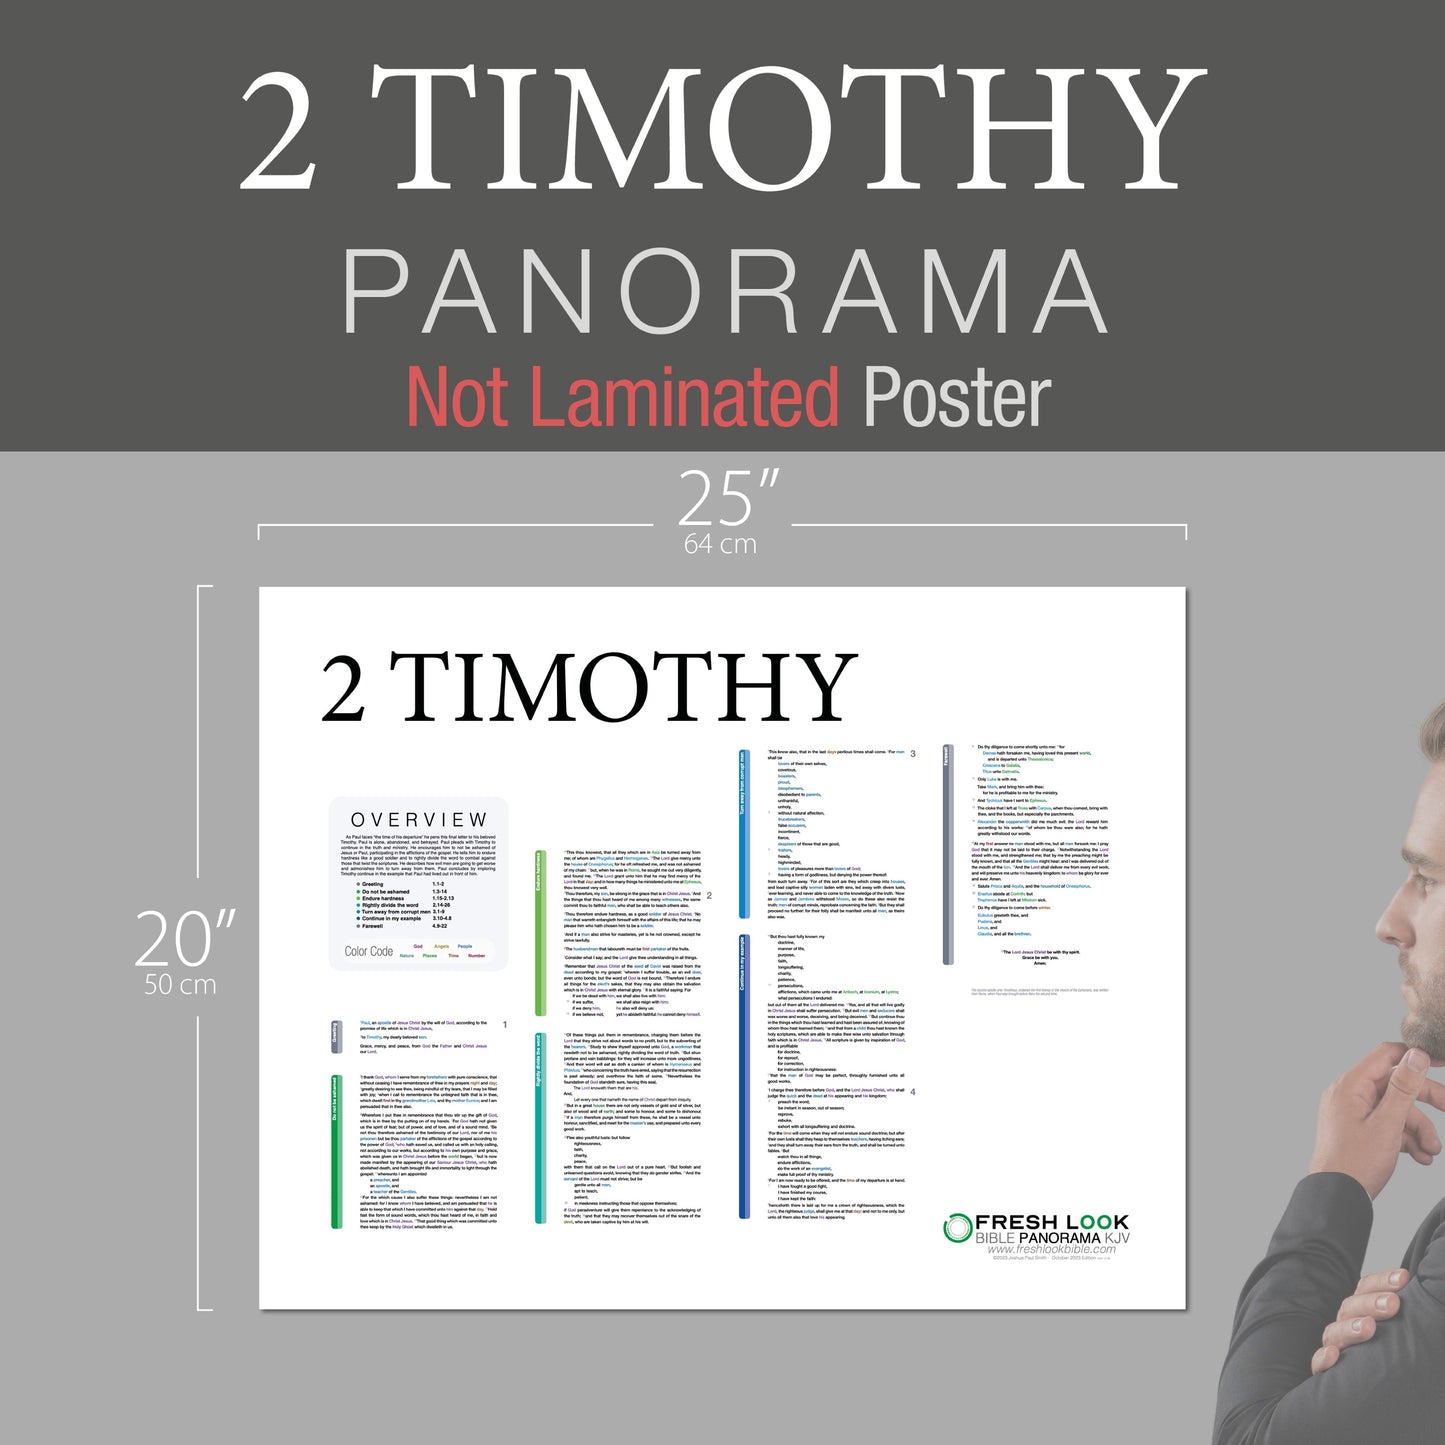 2 Timothy Panorama Not Laminated